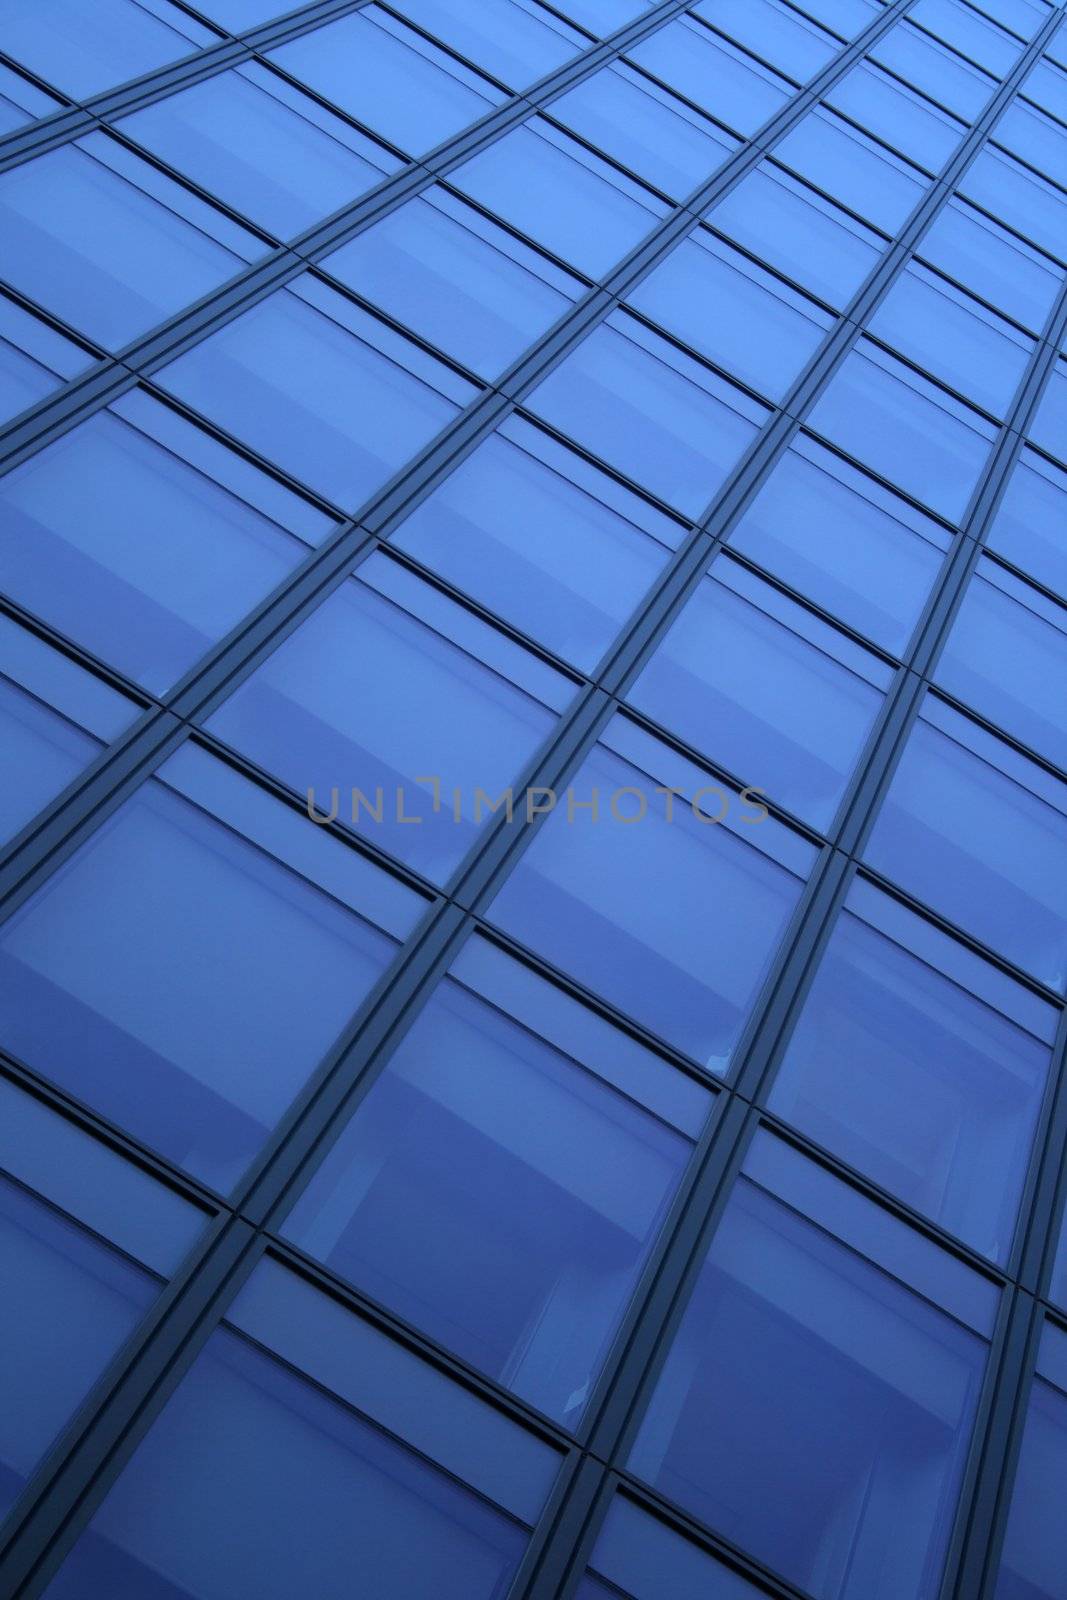 Blue windows of a skyscraper, forming a diagonal pattern.